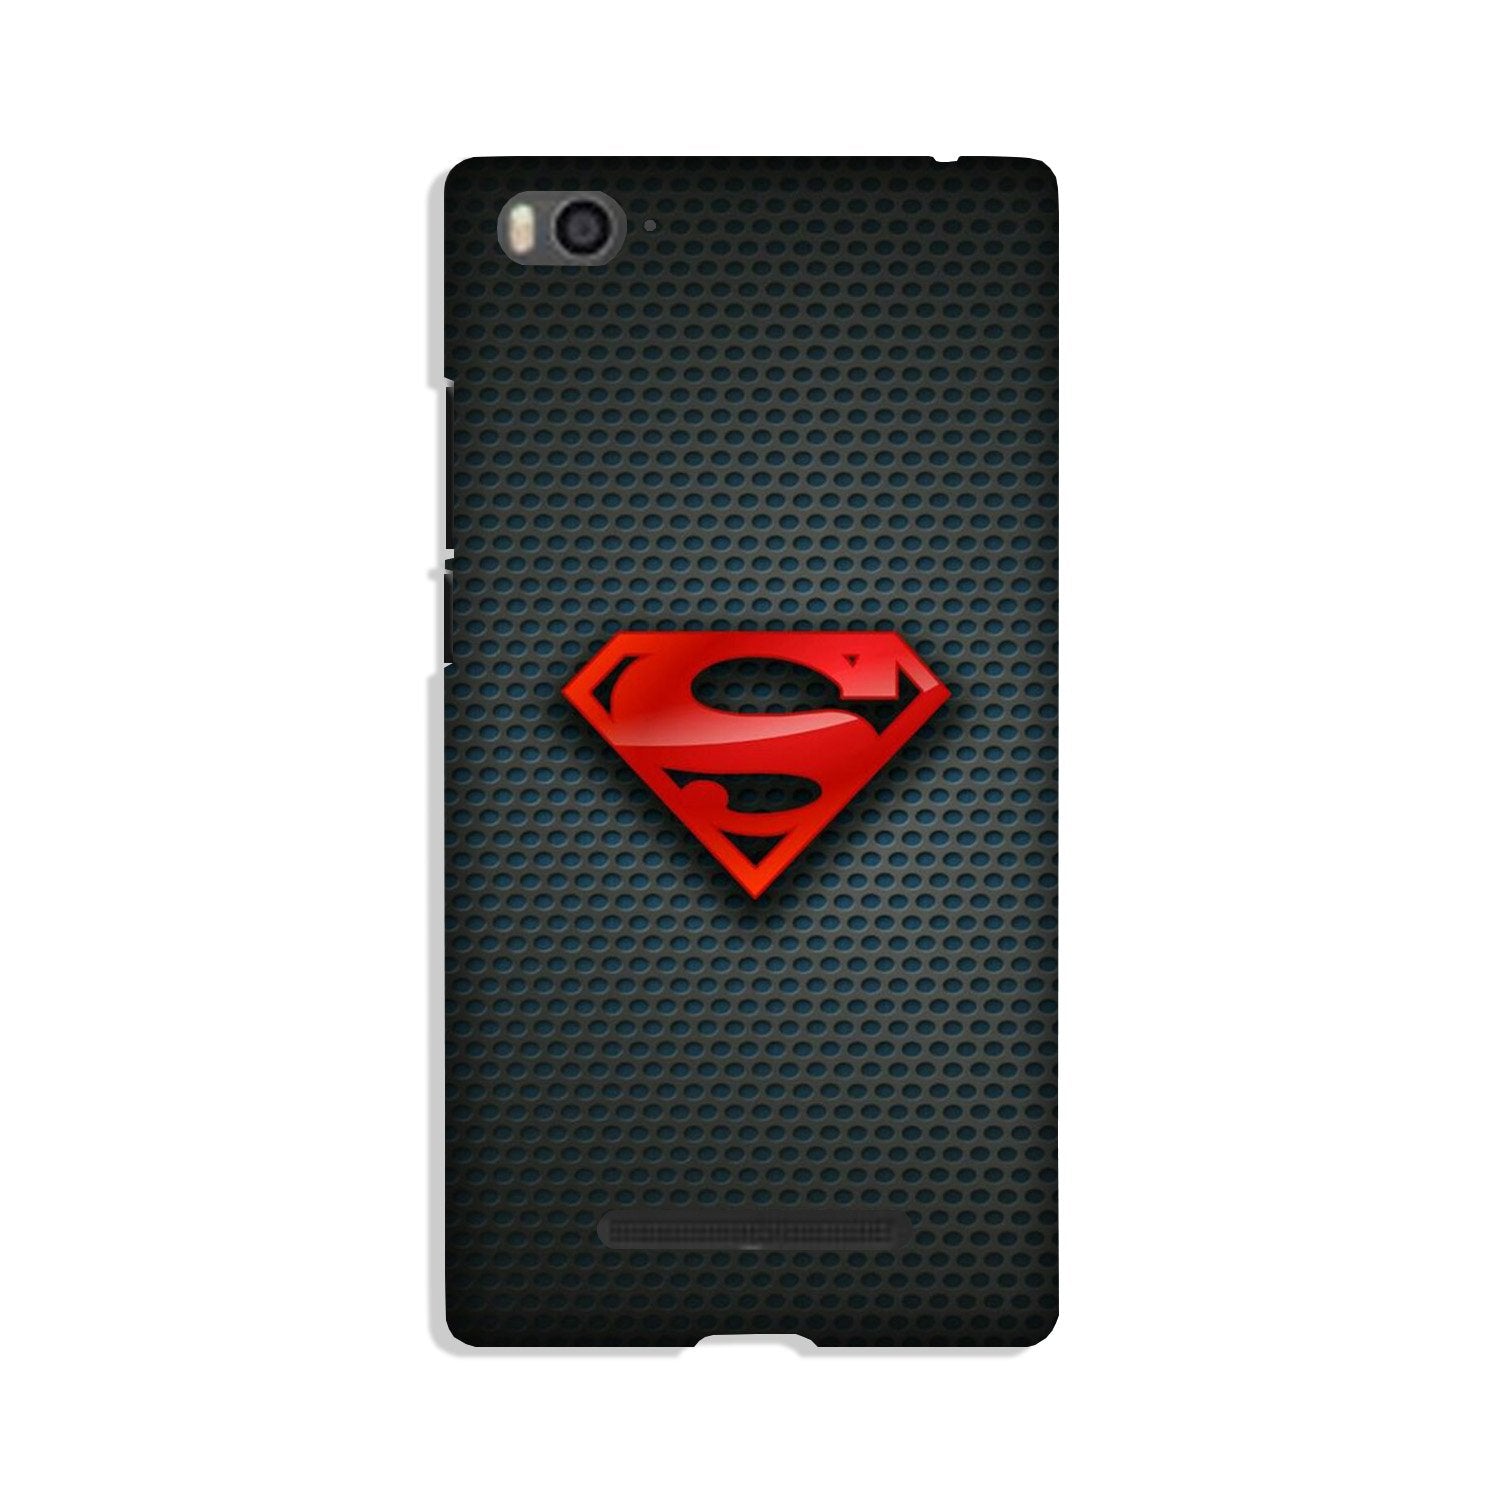 Superman Case for Xiaomi Mi 4i (Design No. 247)